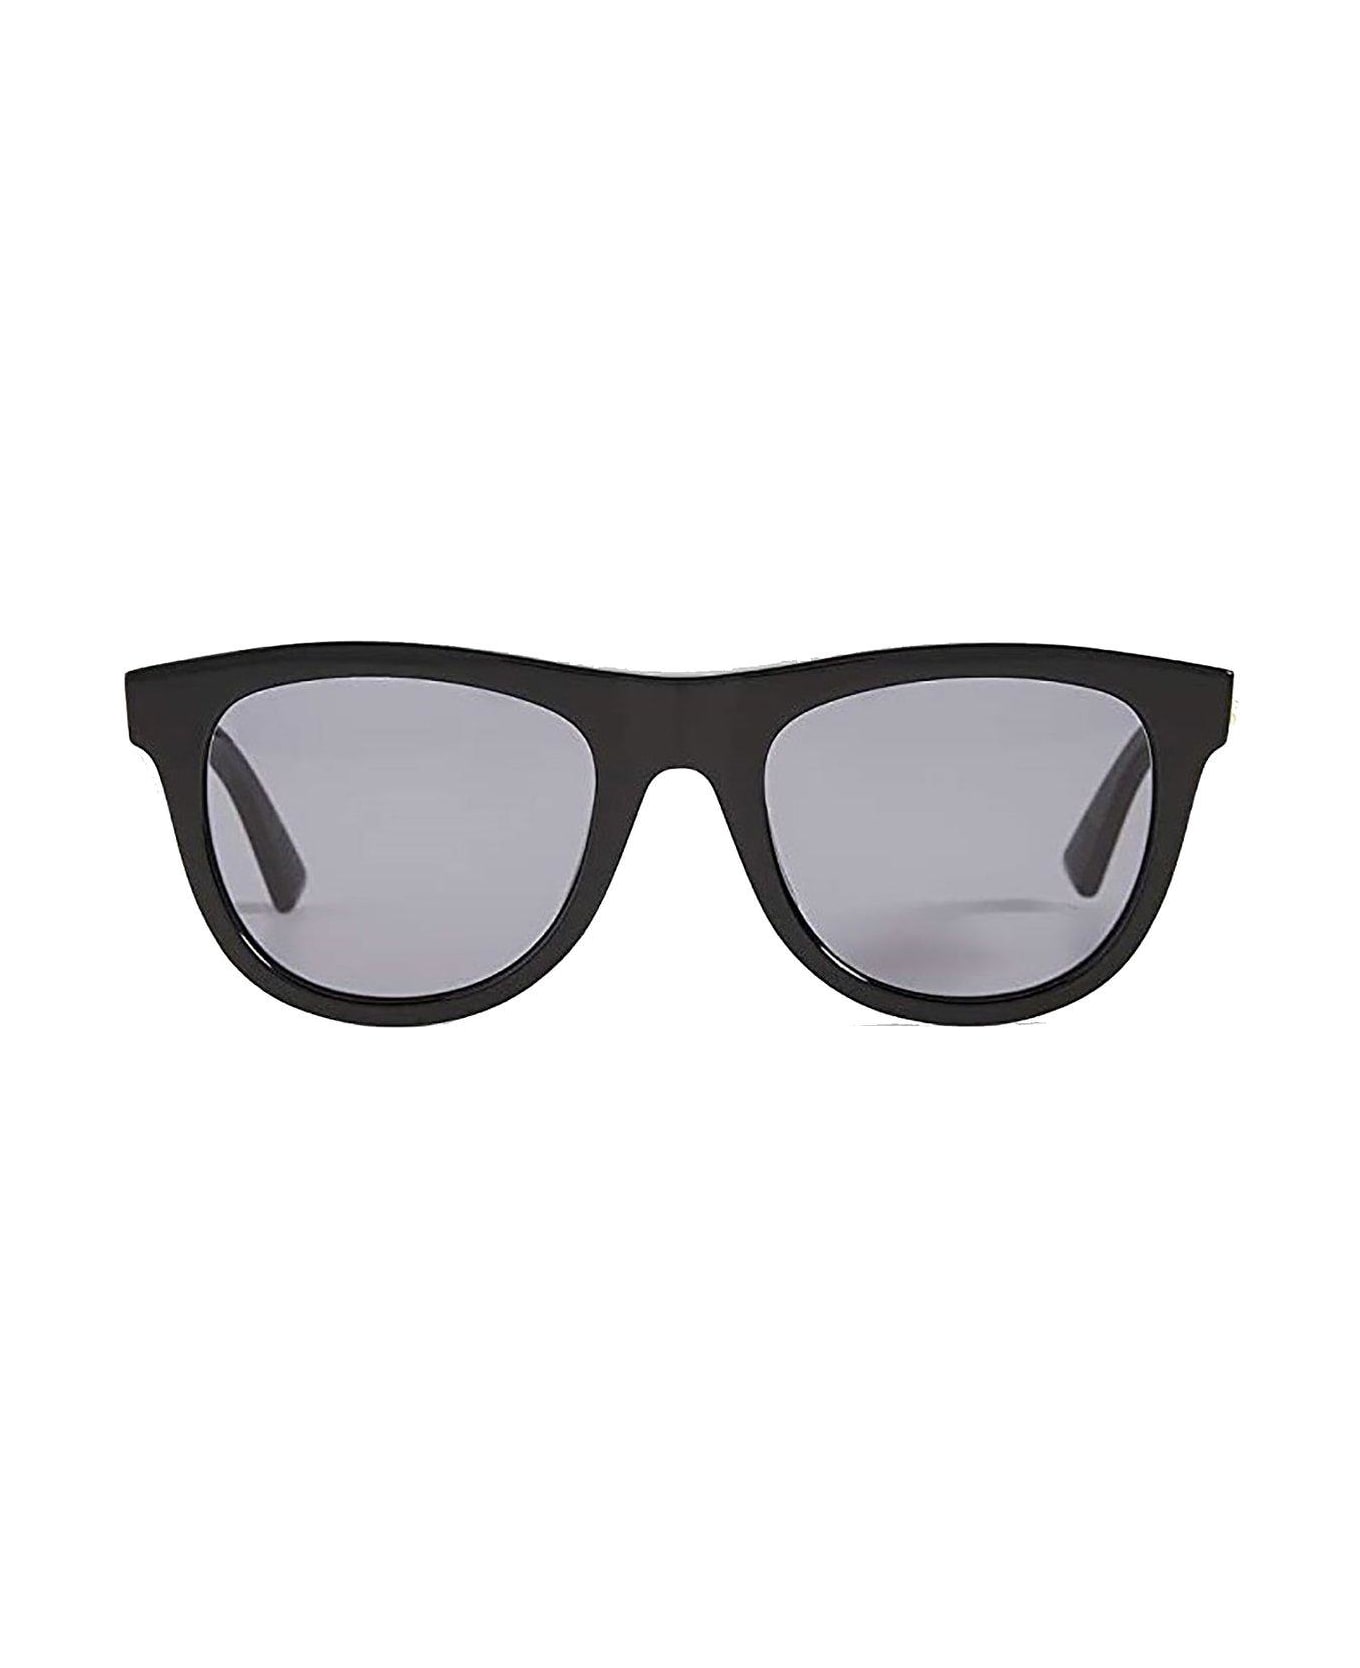 Bottega Veneta Eyewear Round Frame Sunglasses - 001 black black grey サングラス